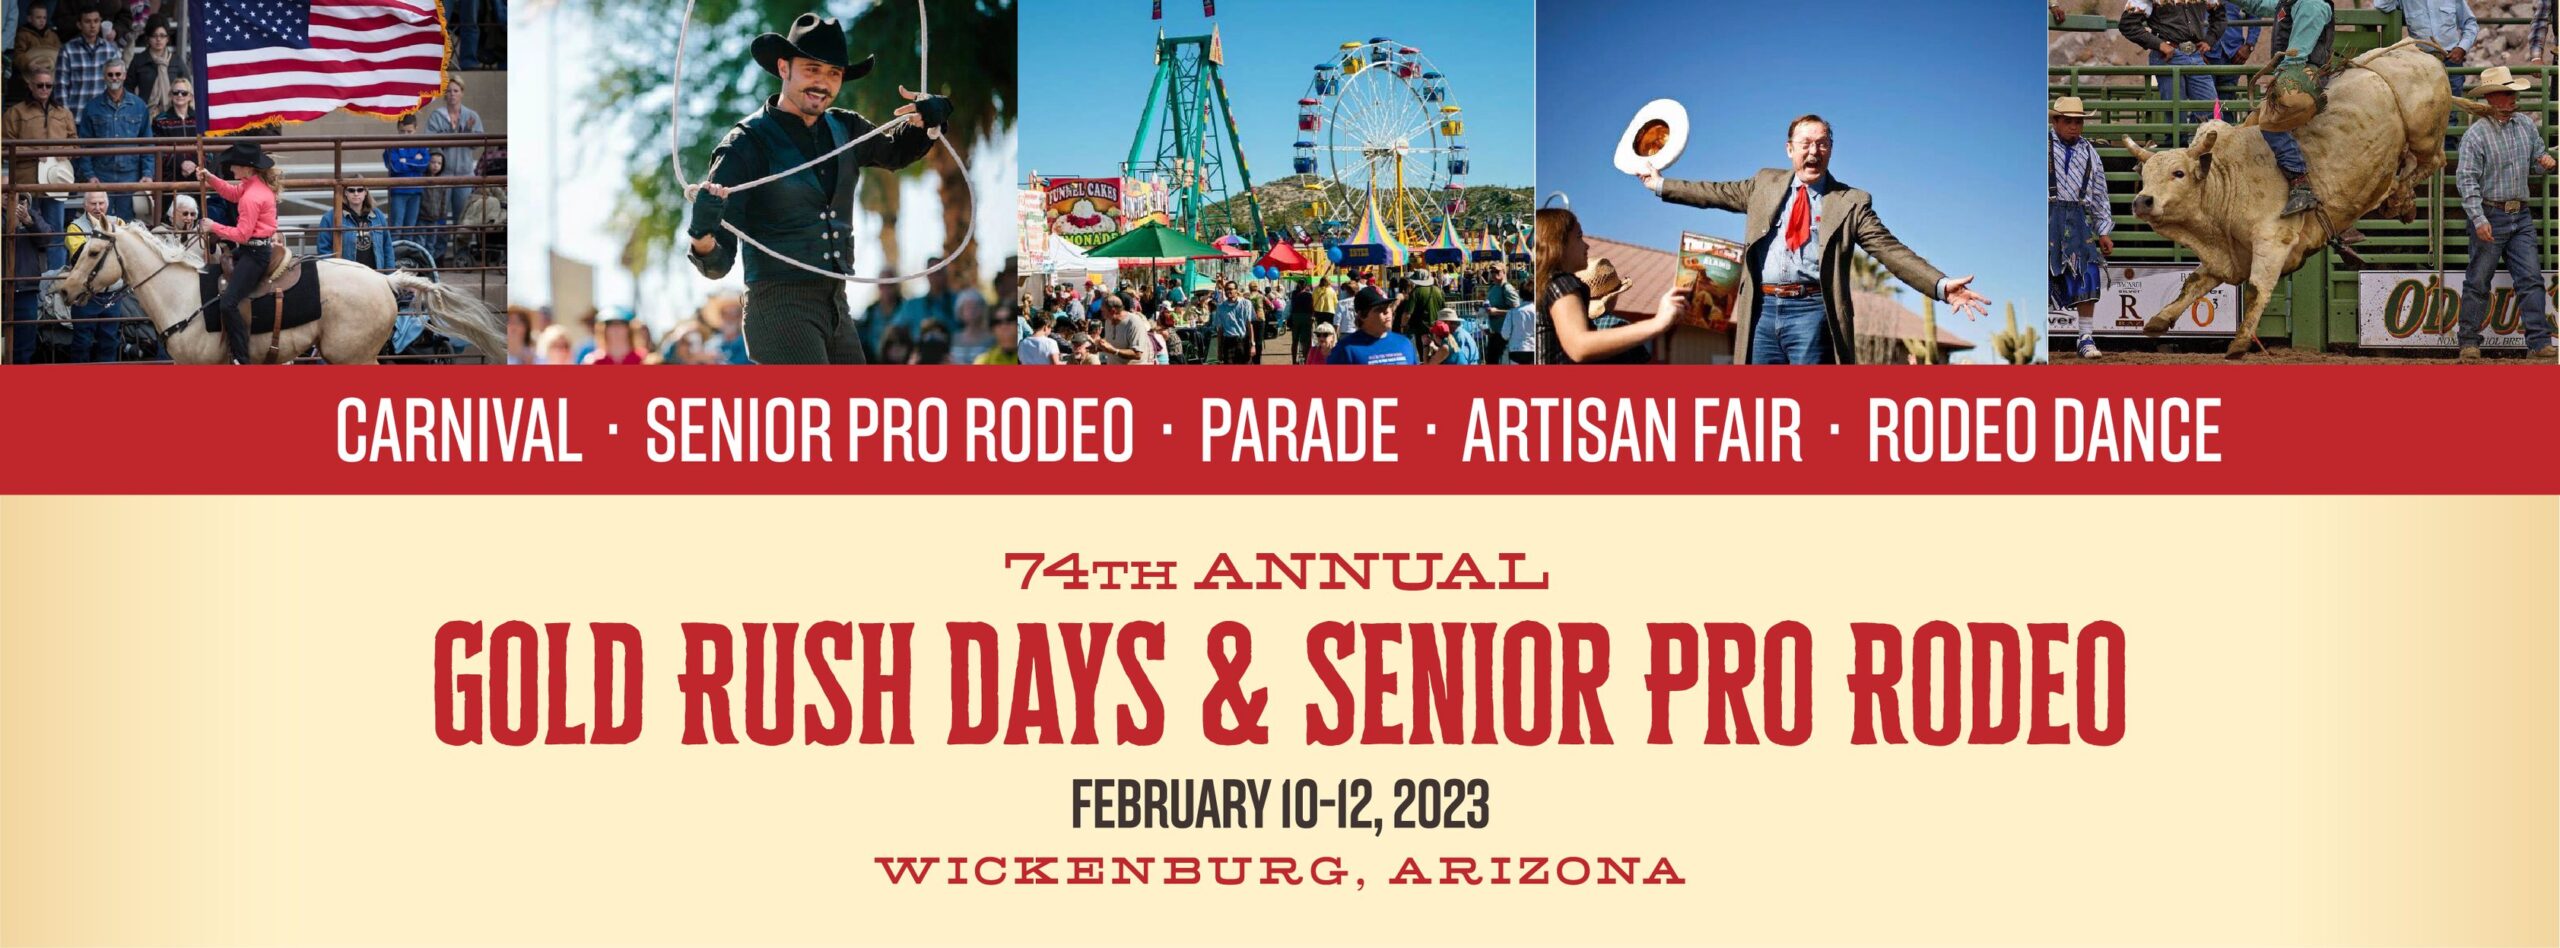 Wickenburg Gold Rush Days Returns for 2023! Cowboy Lifestyle Network